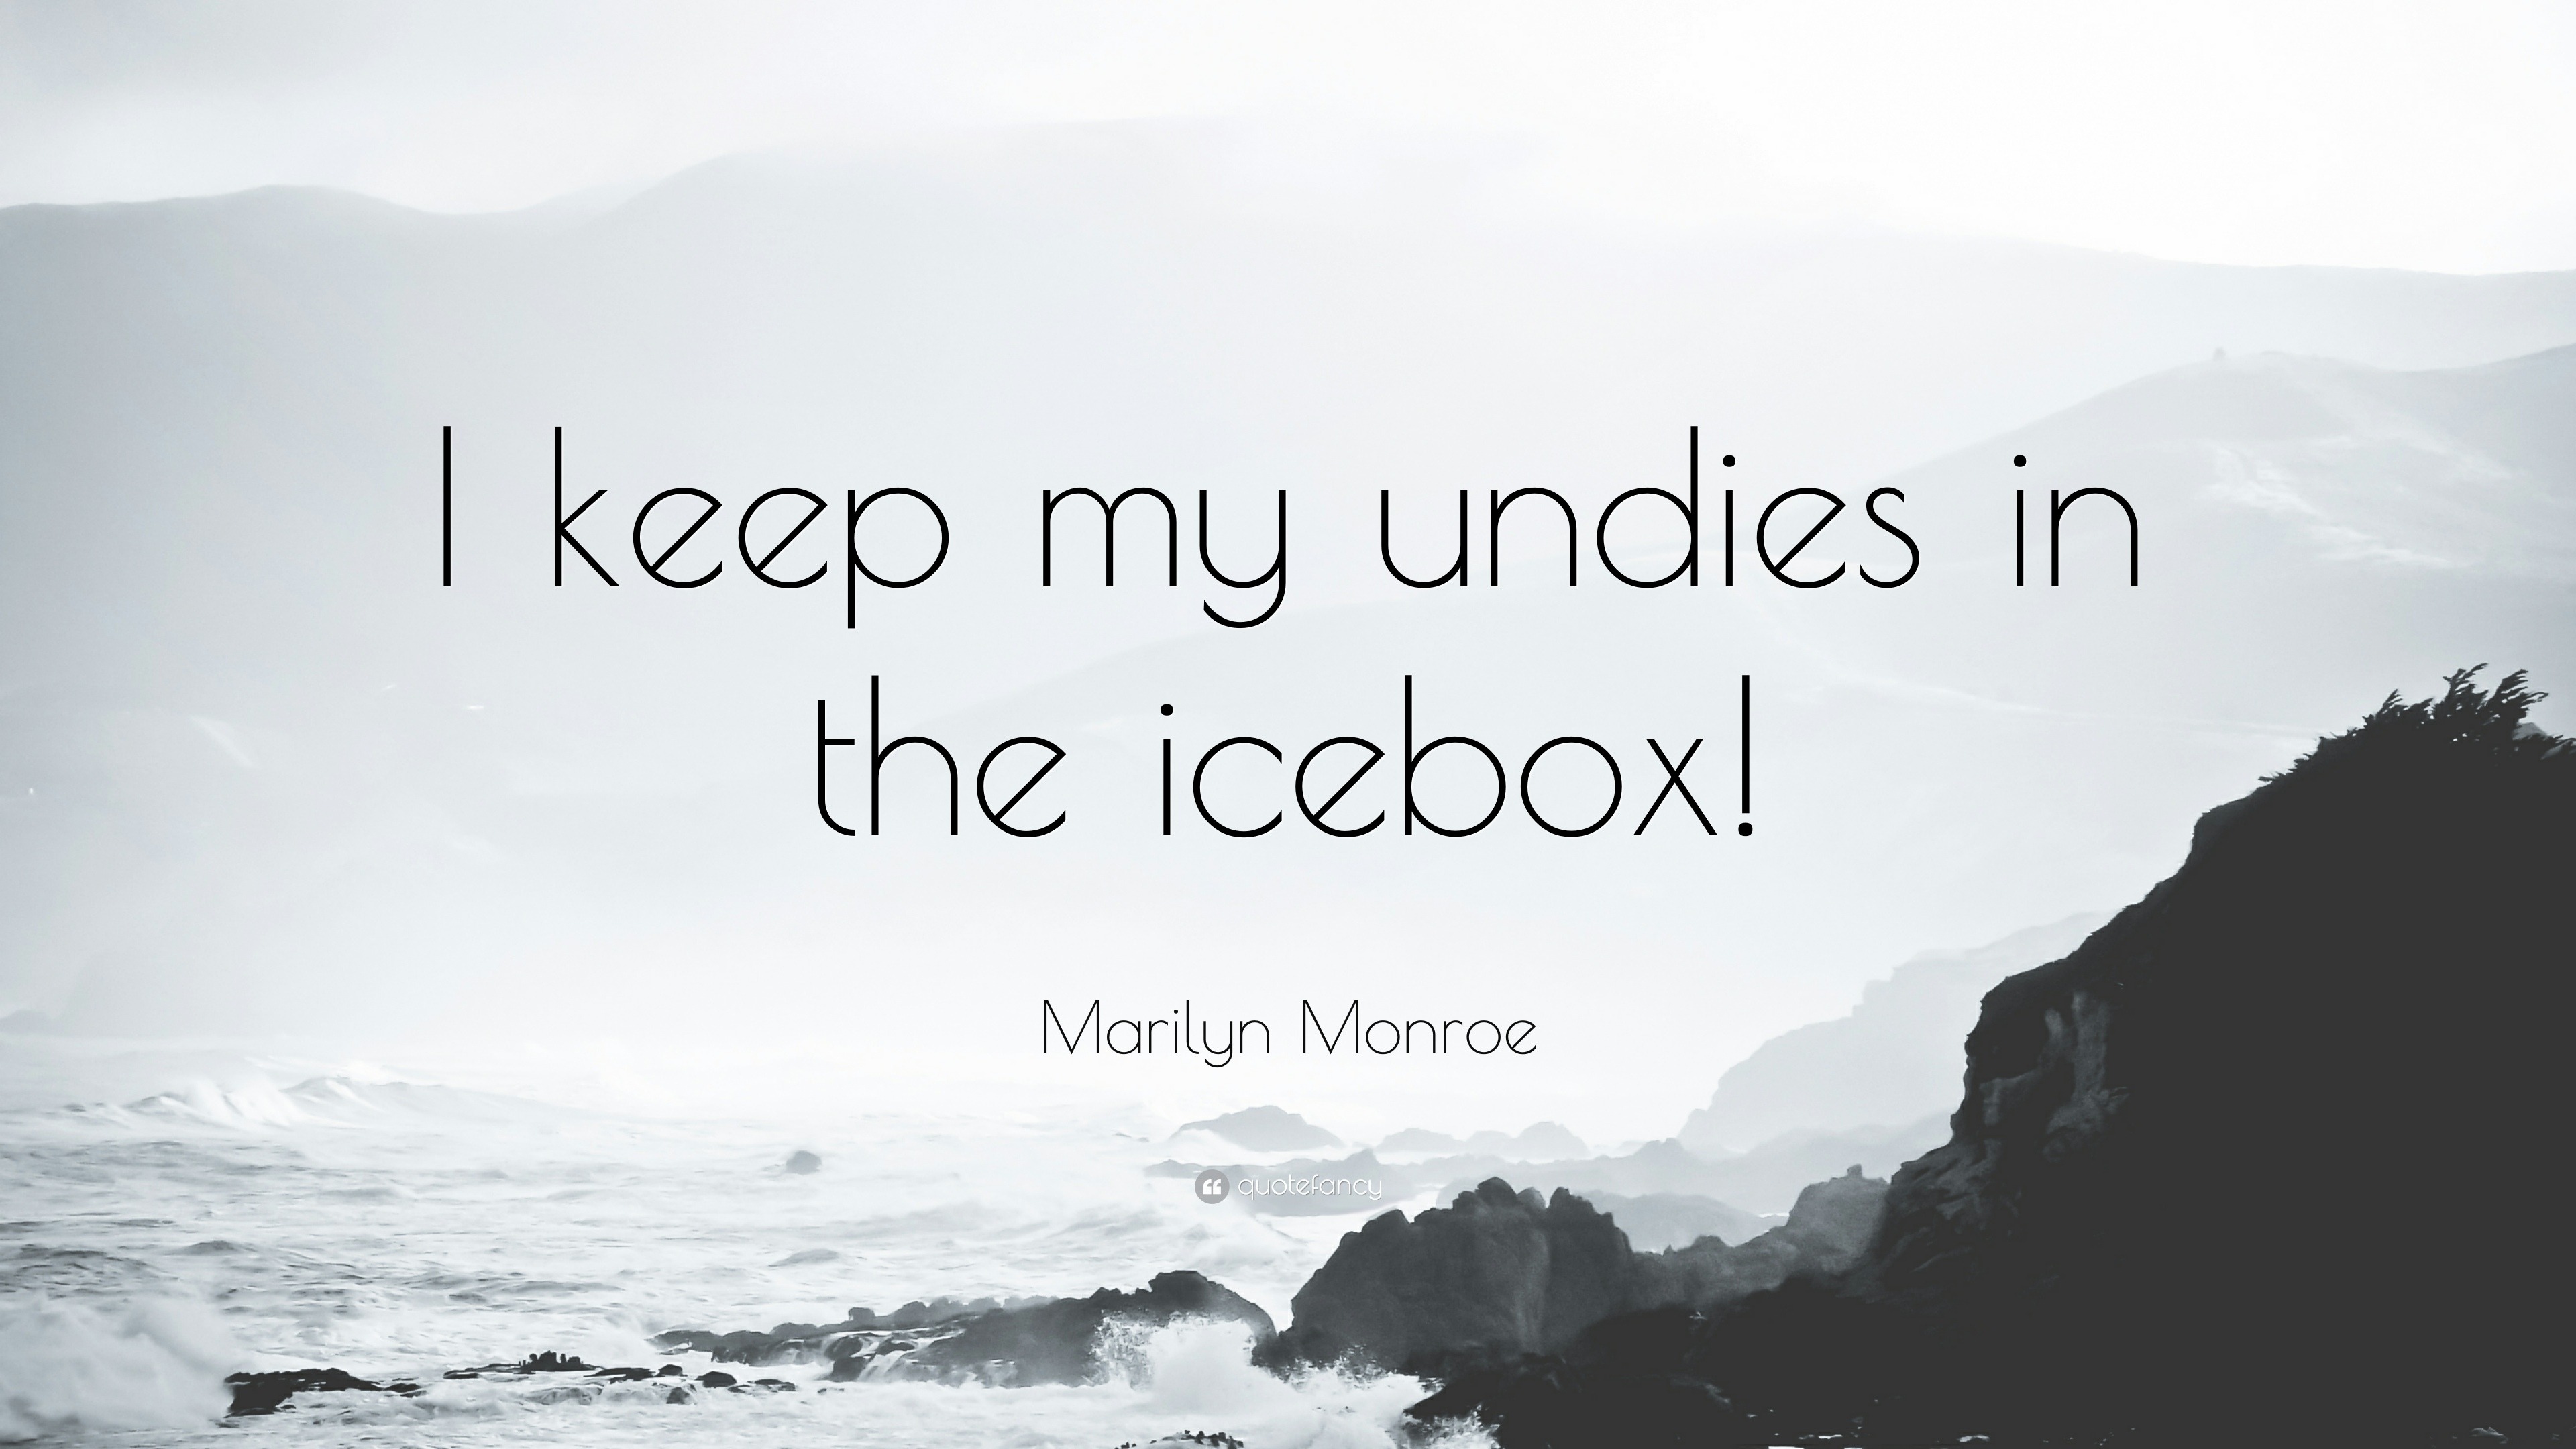 Marilyn Monroe Quote: “I keep my undies in the icebox!”